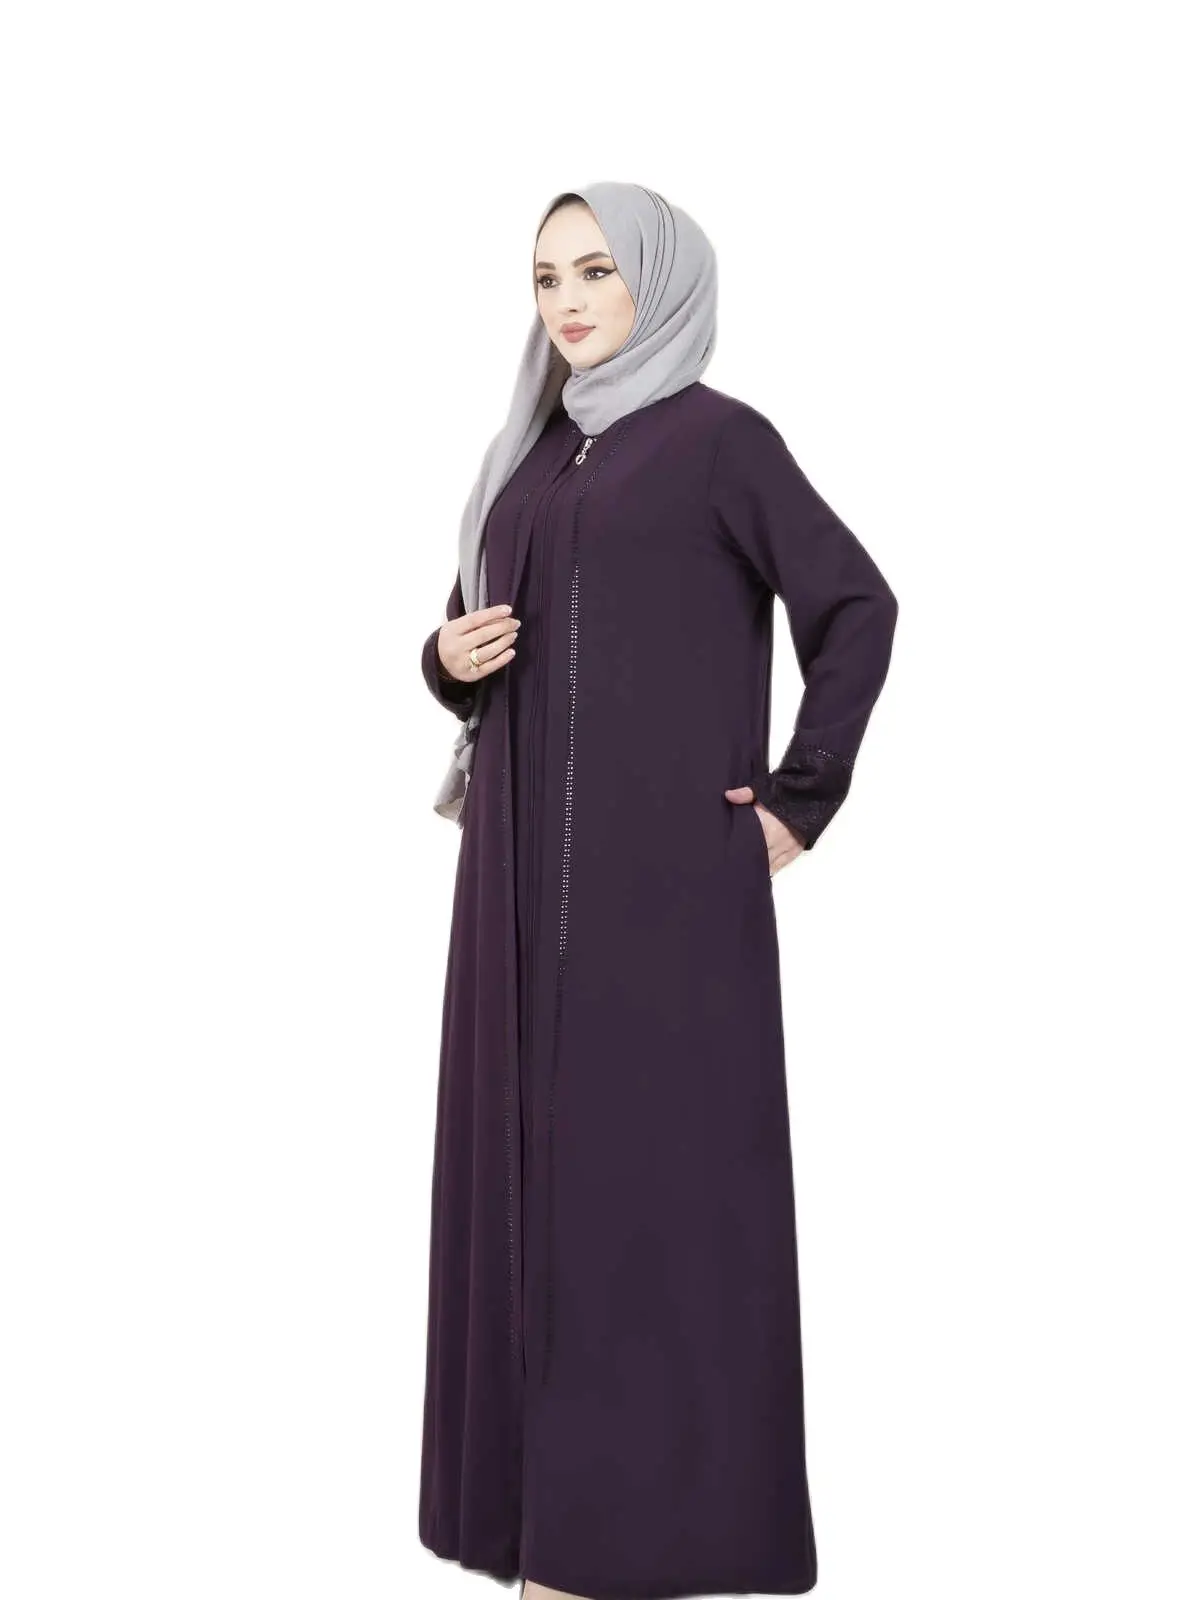 

New Season Seasonal Long Sleeves Lace Detailed Abaya Dubai Africa Turkey Zippered Full Length Hijab Abaya Hijab Dress For Women Muslim Fashion Ramadan Kaftan Islamic Clothing Does Not Show Underwear Comfortable